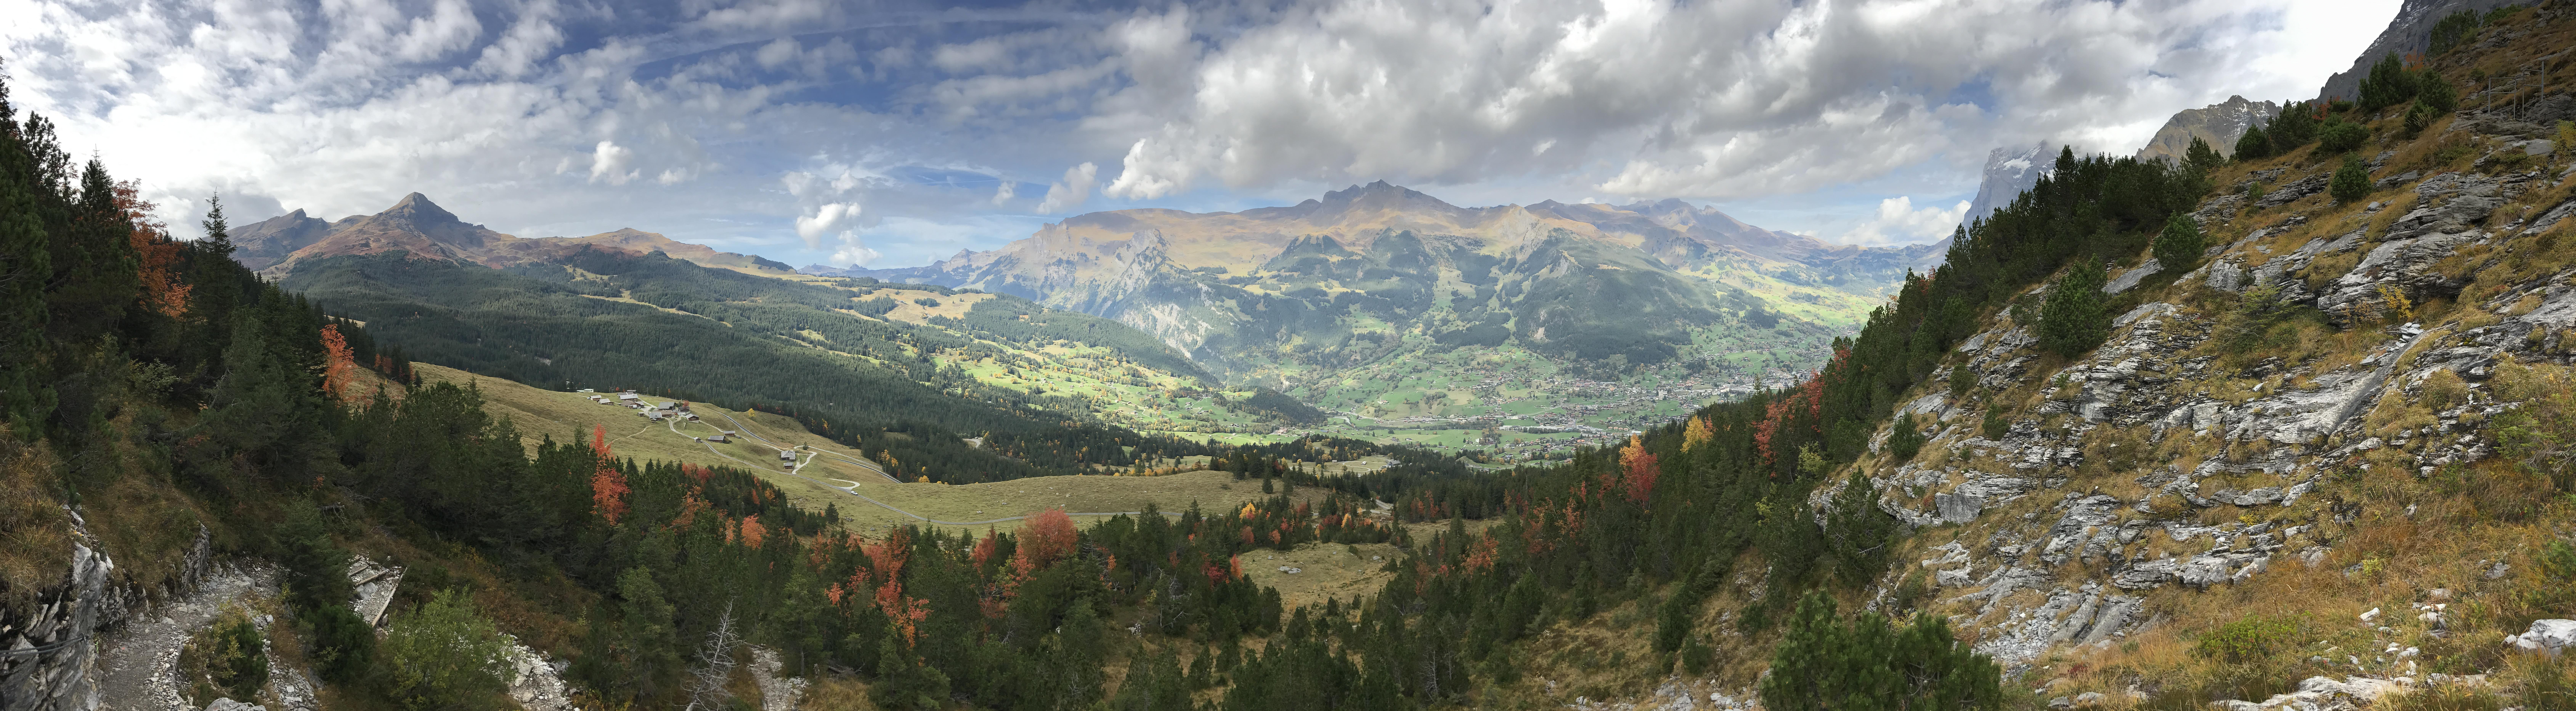 Breathtaking views while walking the Eiger Ultra Trail near